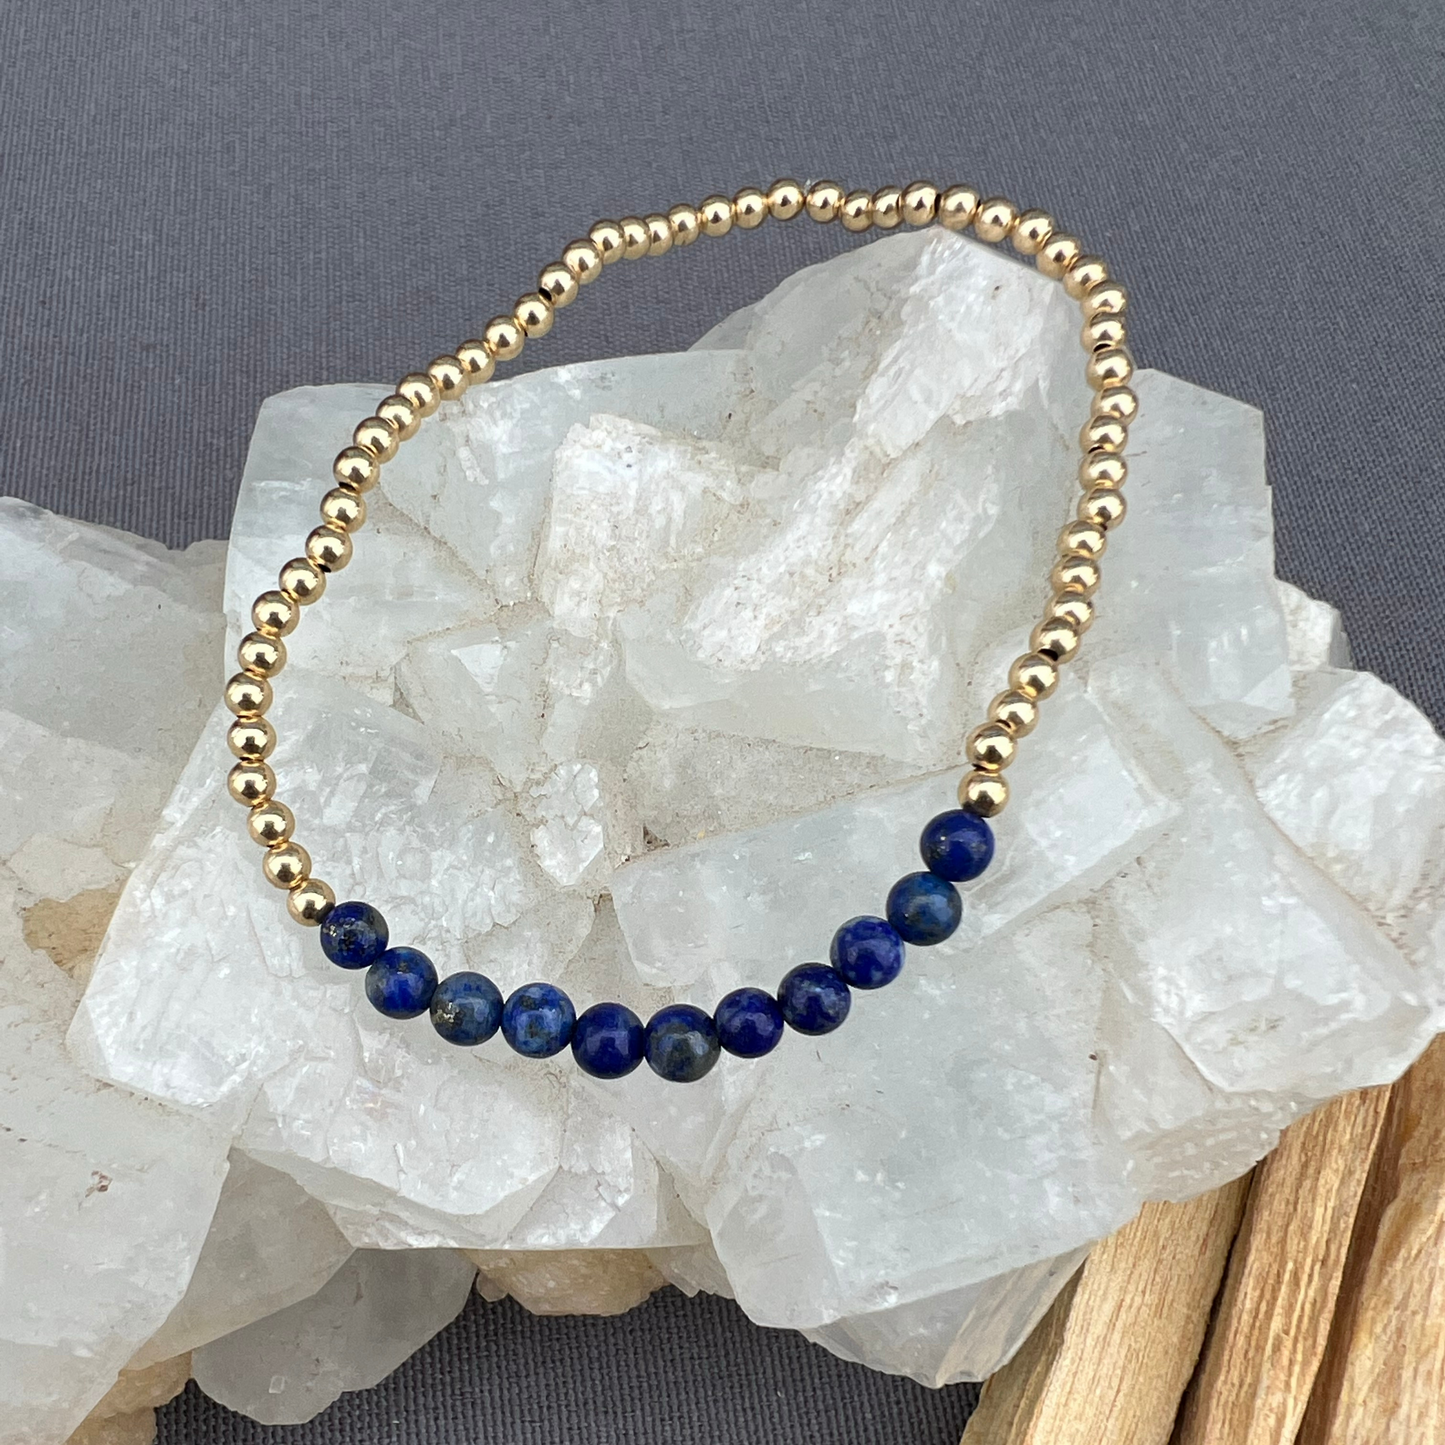 Lapis Lazuli & Gold Bracelet